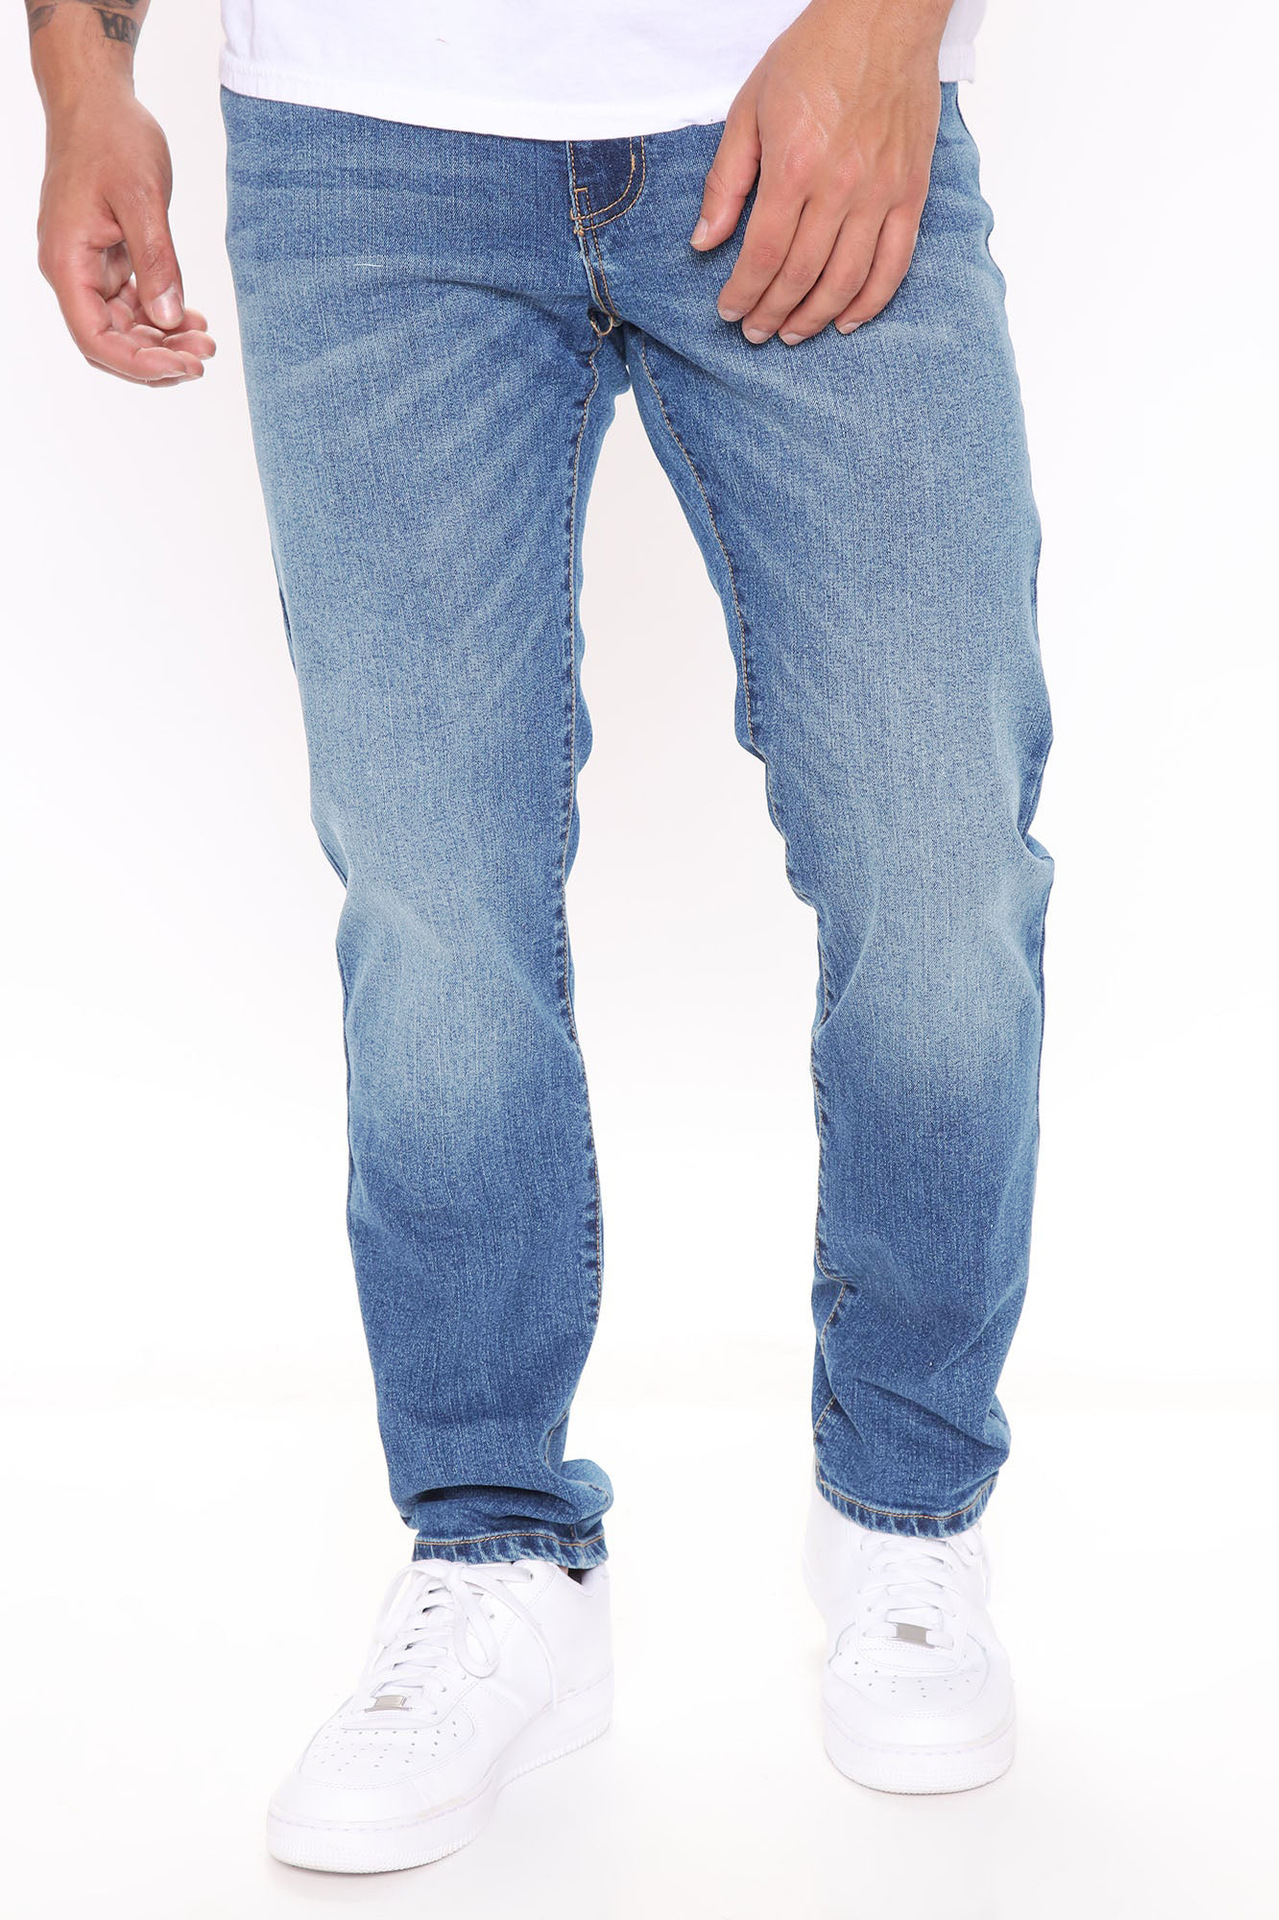 Vintage Denim Jeans Mens Womens Levis Wrangler Lee Wholesale Job Lot x35  -Lot978 | eBay